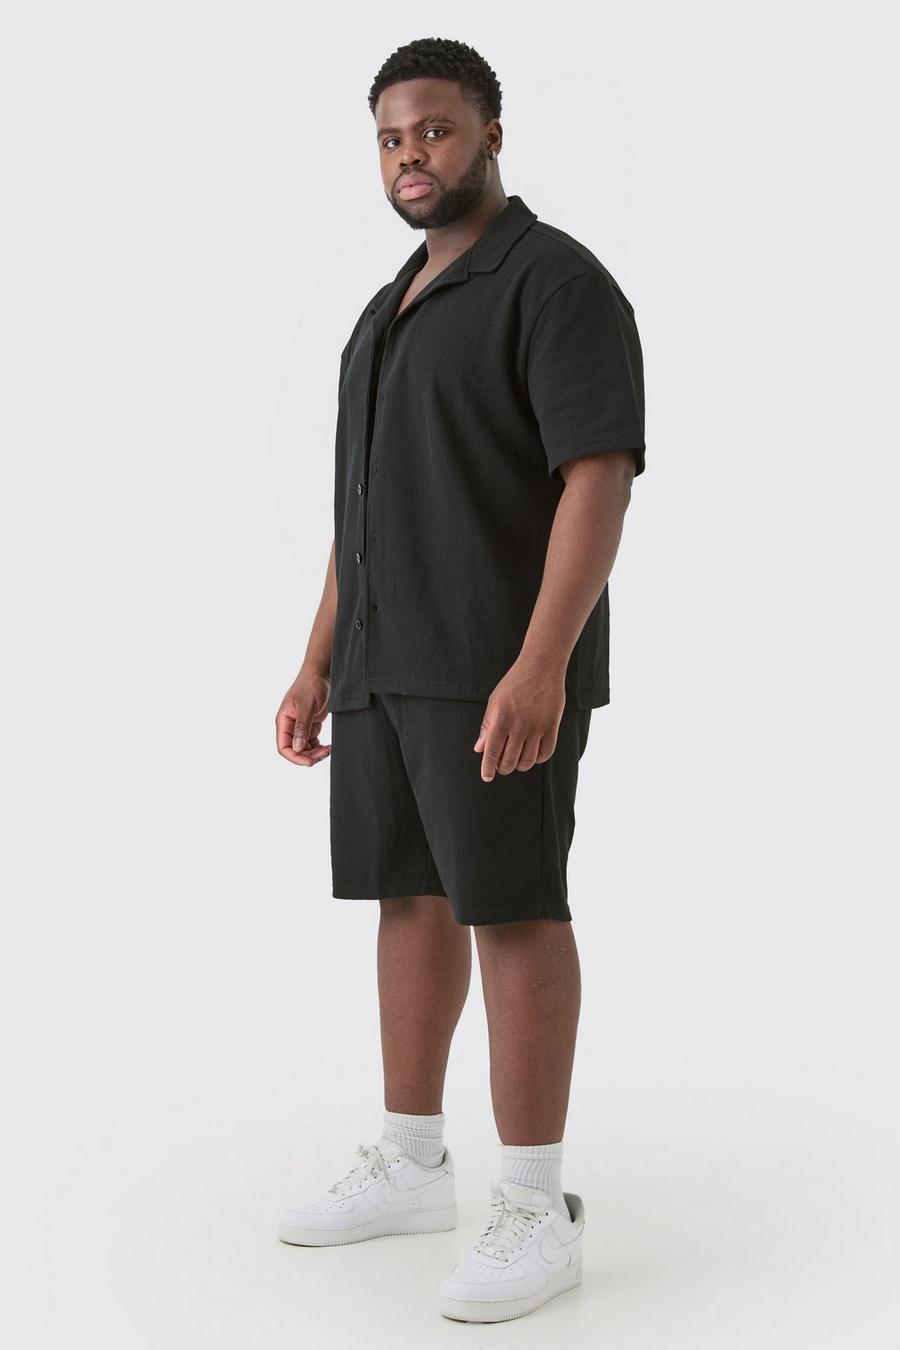 Plus kurzärmliges Hemd & Shorts in Schwarz, Black